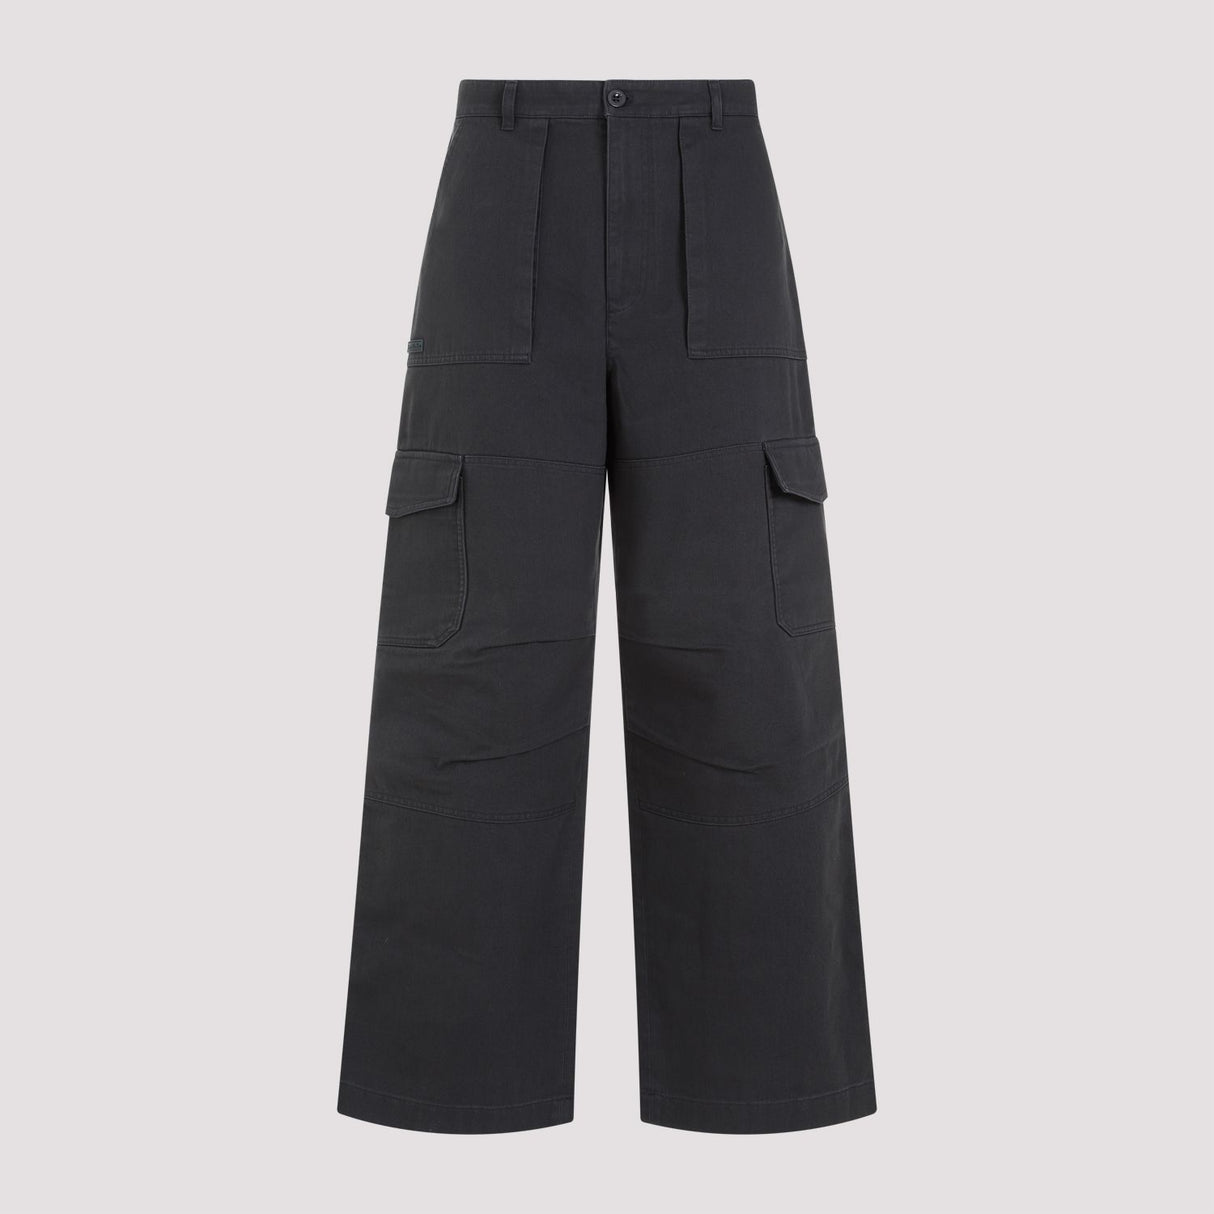 ACNE STUDIOS Men's Dark Grey Cargo Pants for SS24 Collection